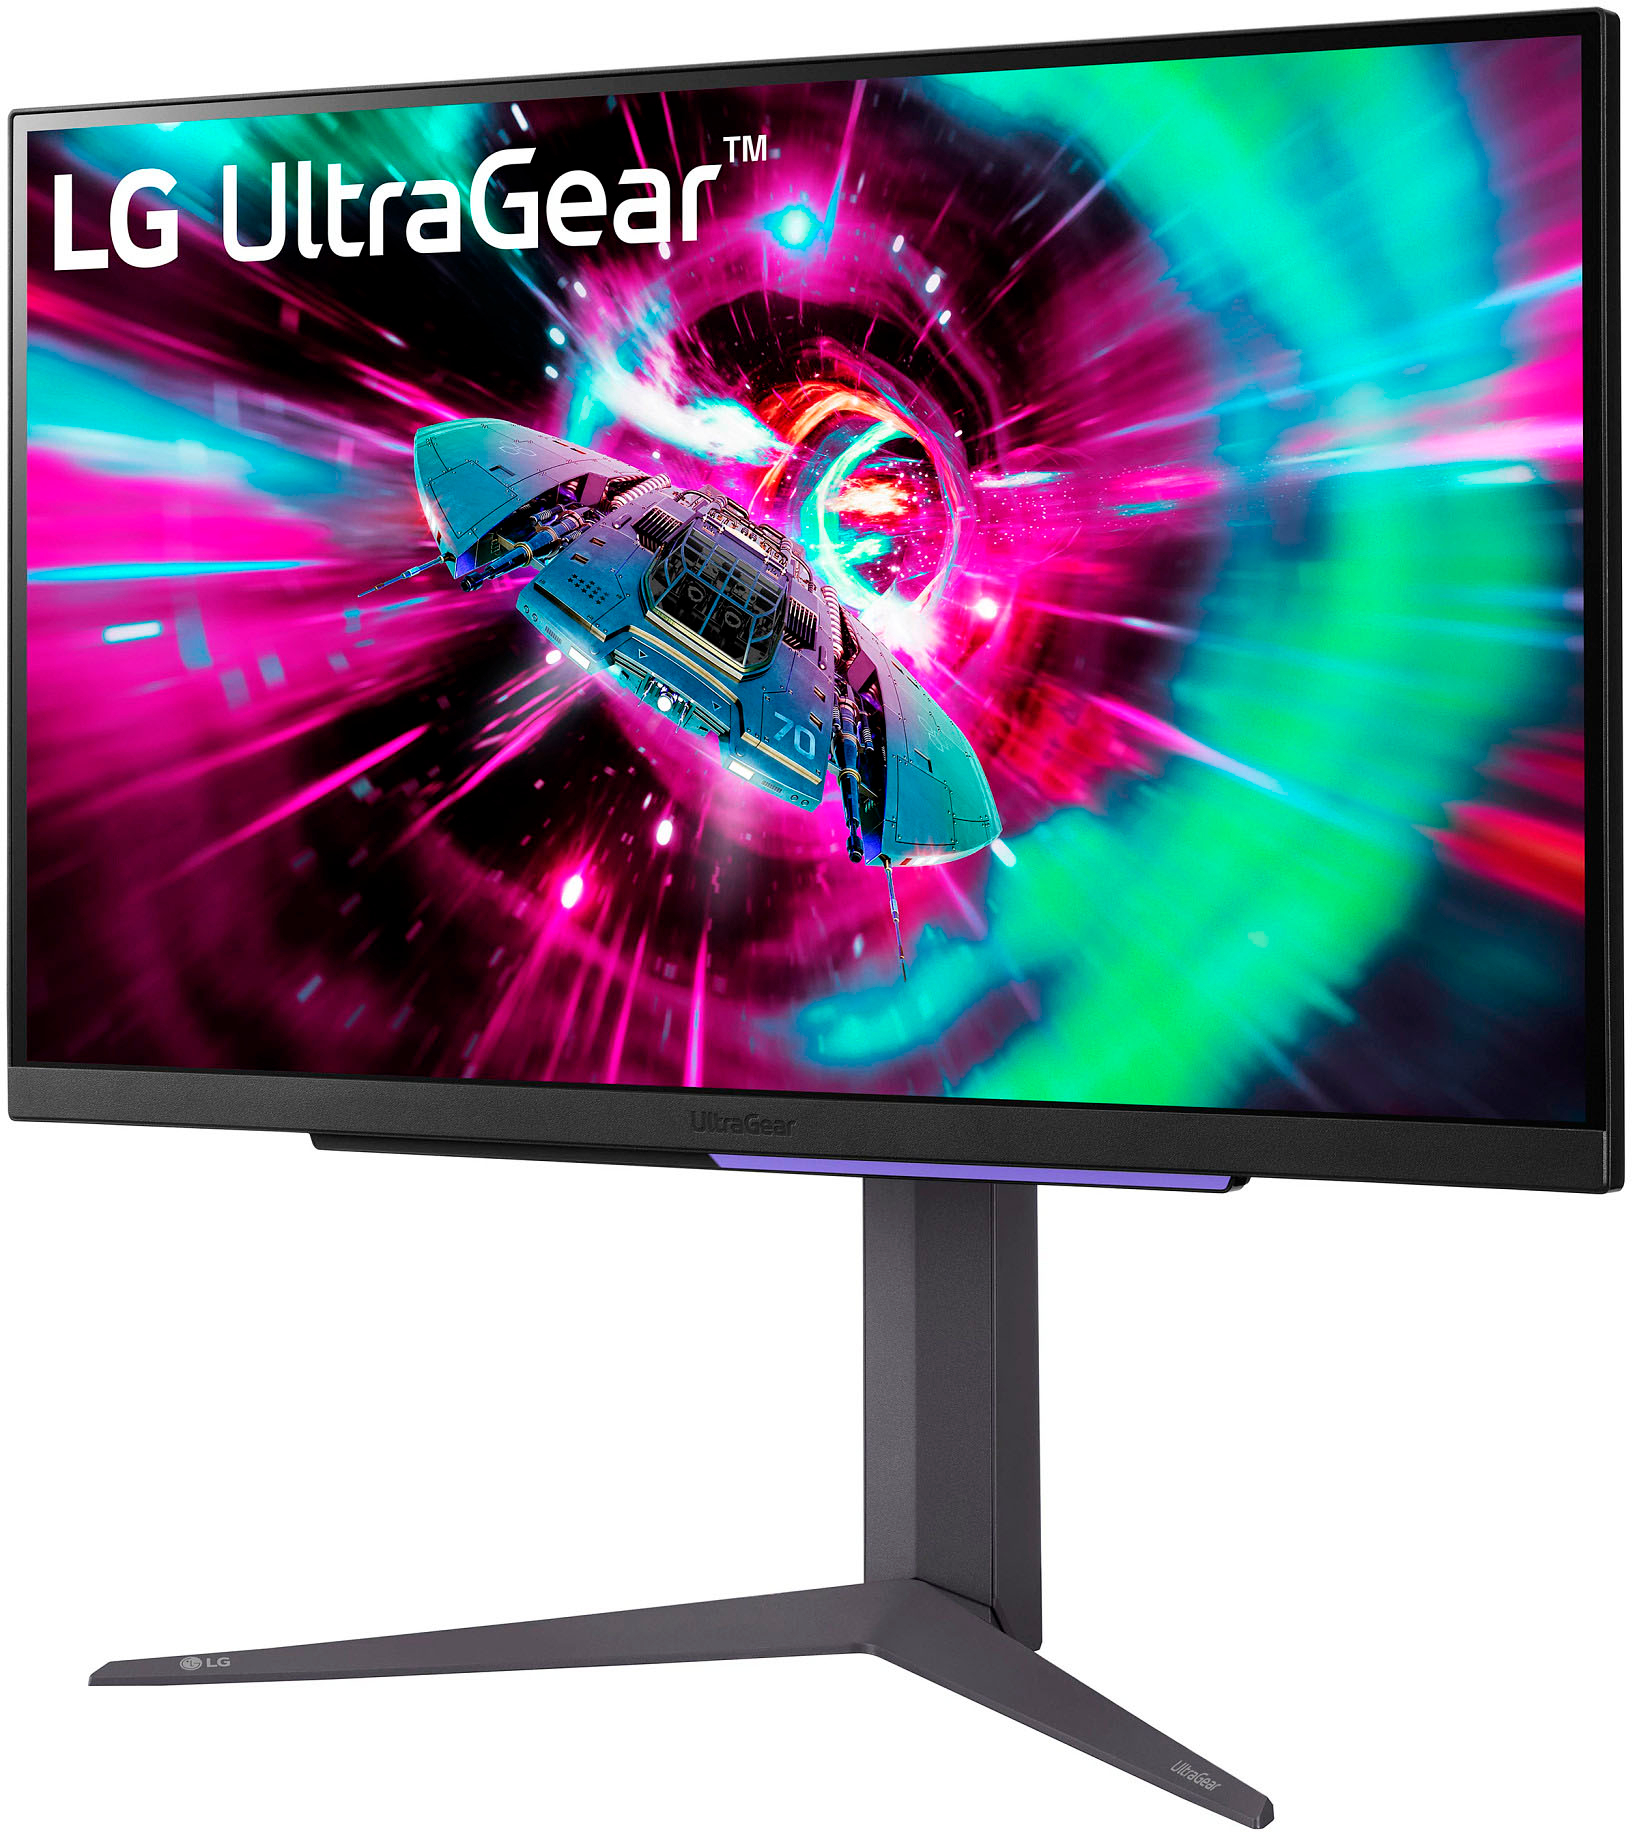 LG UltraGear 27 HD IPS LED TV Monitor, Big Sandy Superstore